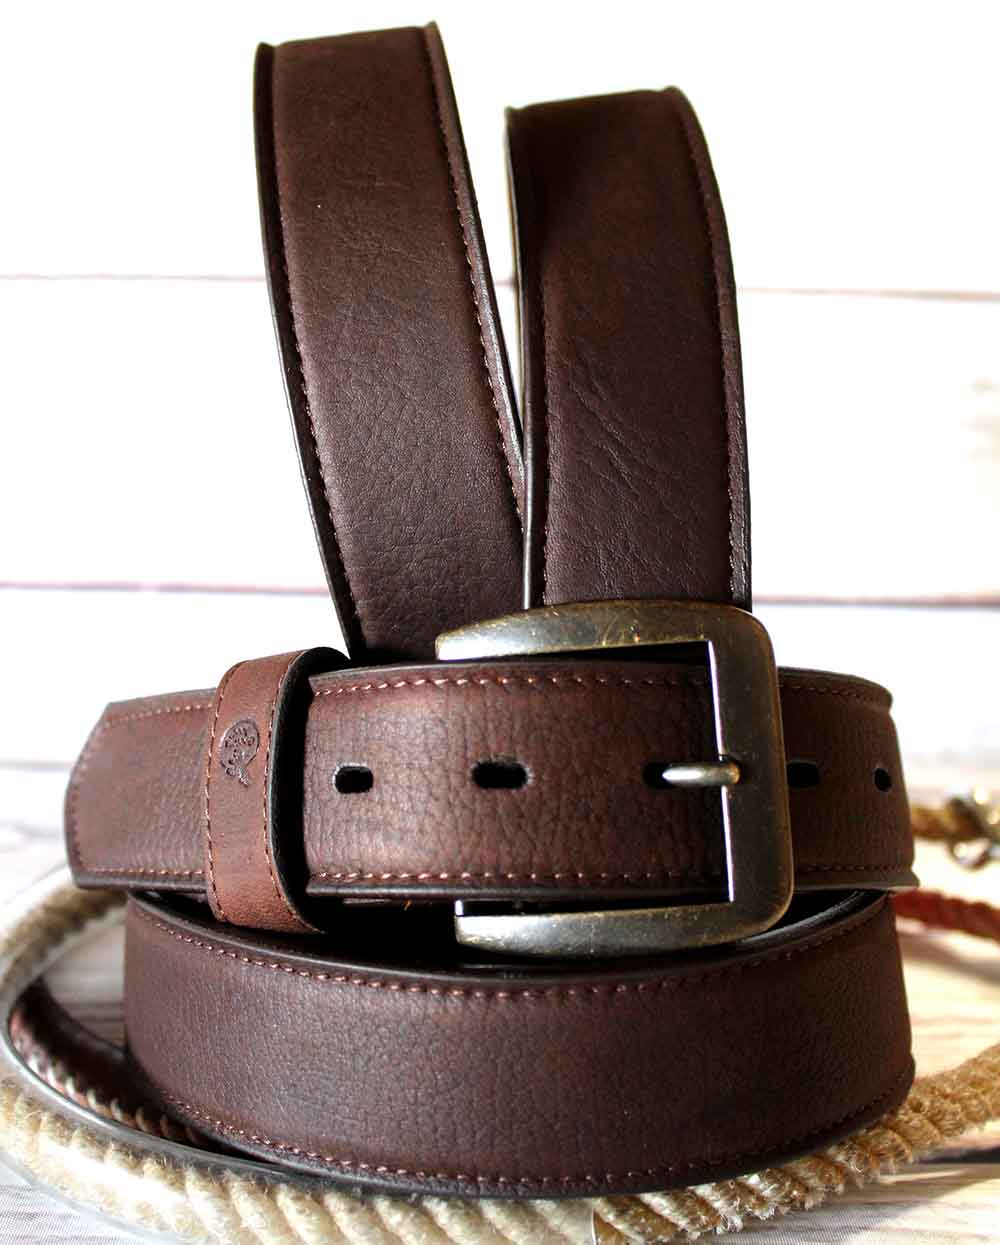 3D USA 1-1/2” Brown Men's Work Uniform Fashion Leather Belt 26GB145 | eBay